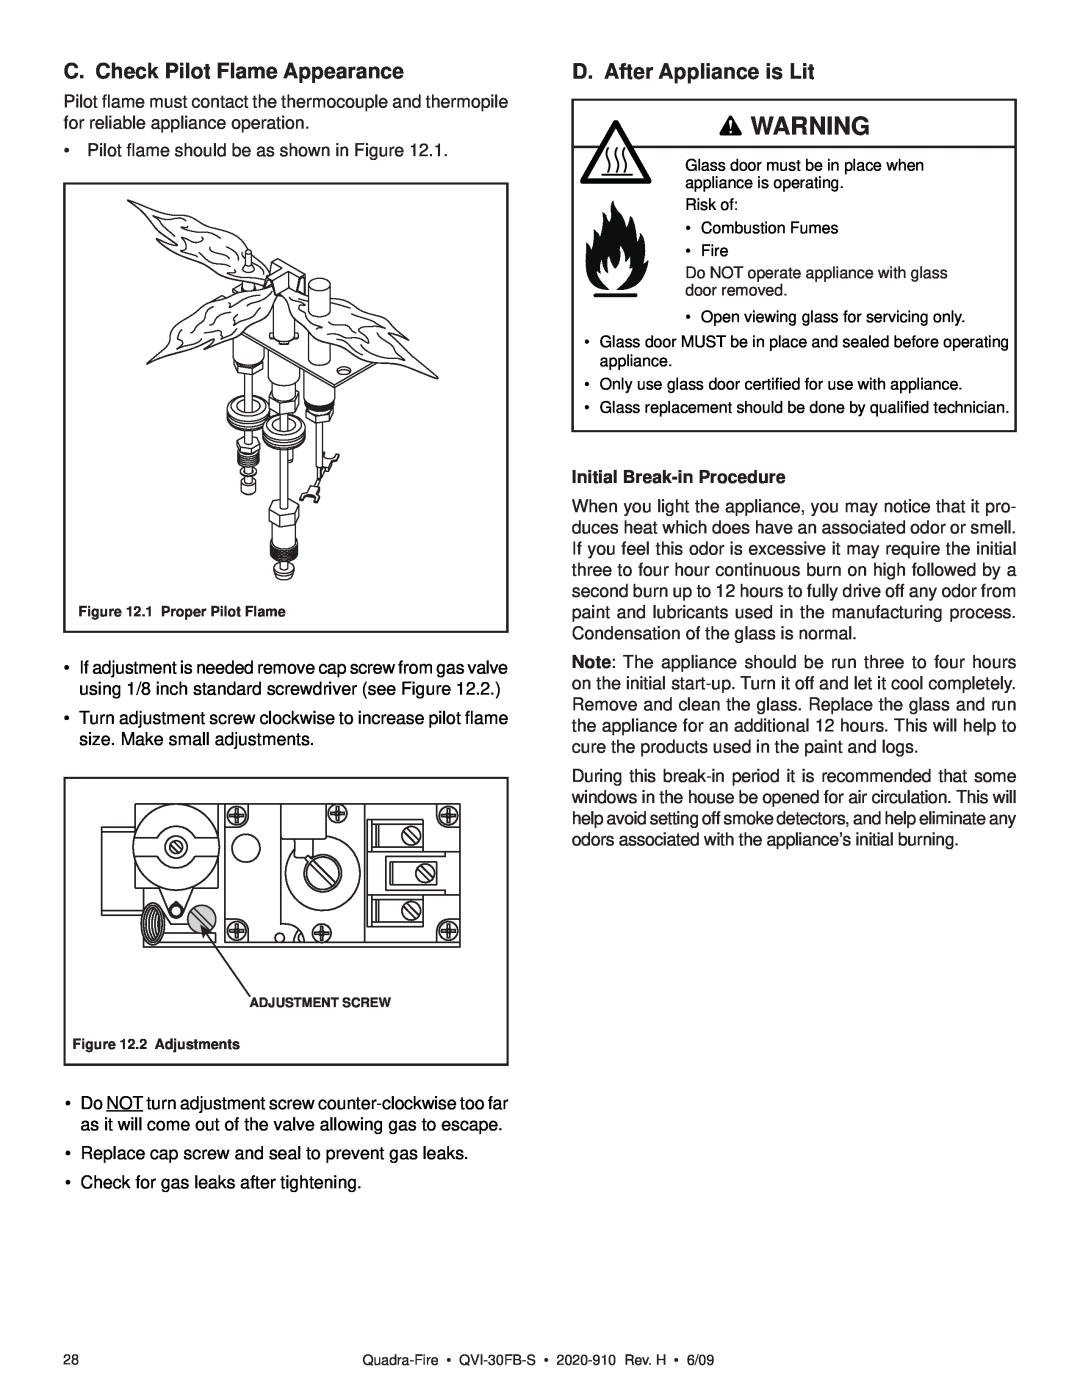 Quadra-Fire QVI-30FB-S owner manual C. Check Pilot Flame Appearance, D. After Appliance is Lit, Initial Break-inProcedure 